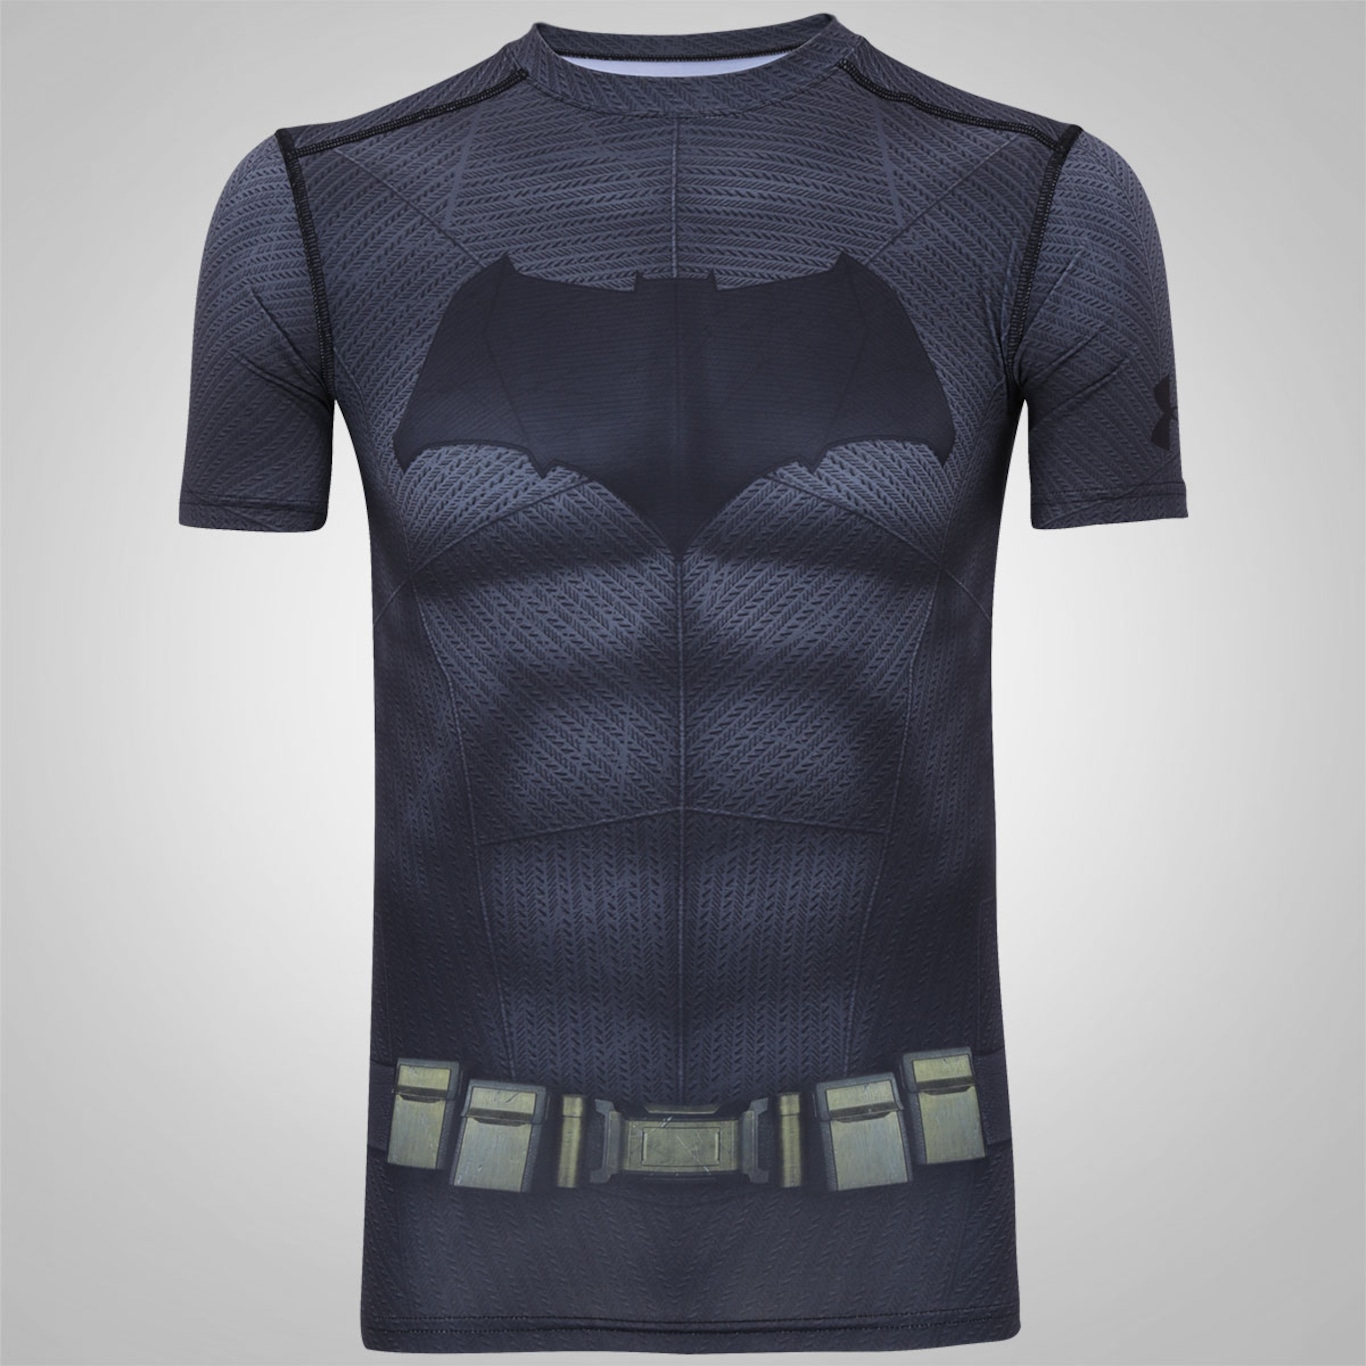 Camiseta do Batman - Músculos